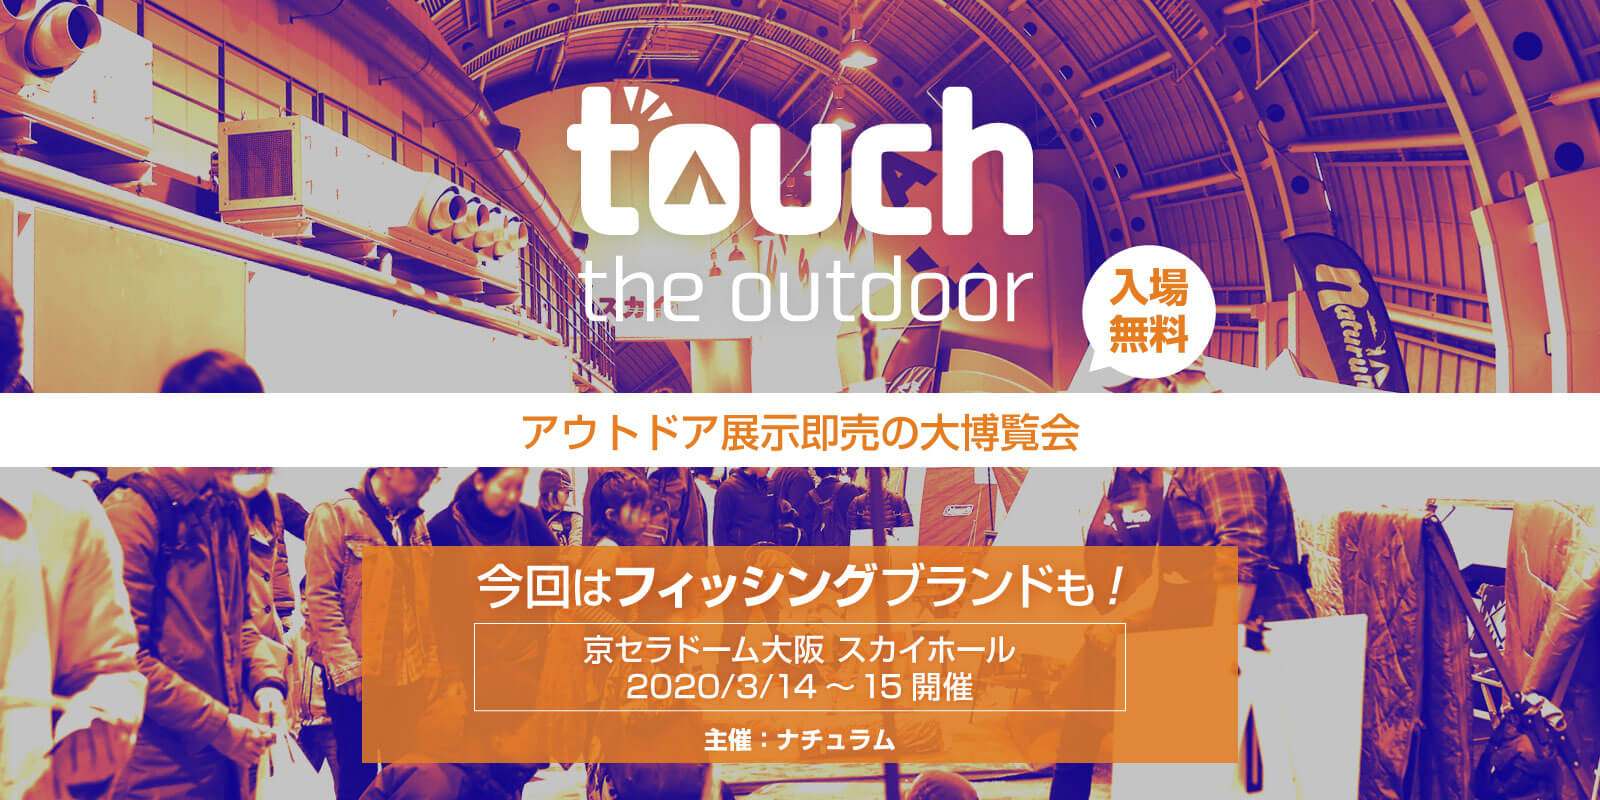 touch the outdoor 京セラドーム大阪 スカイホール